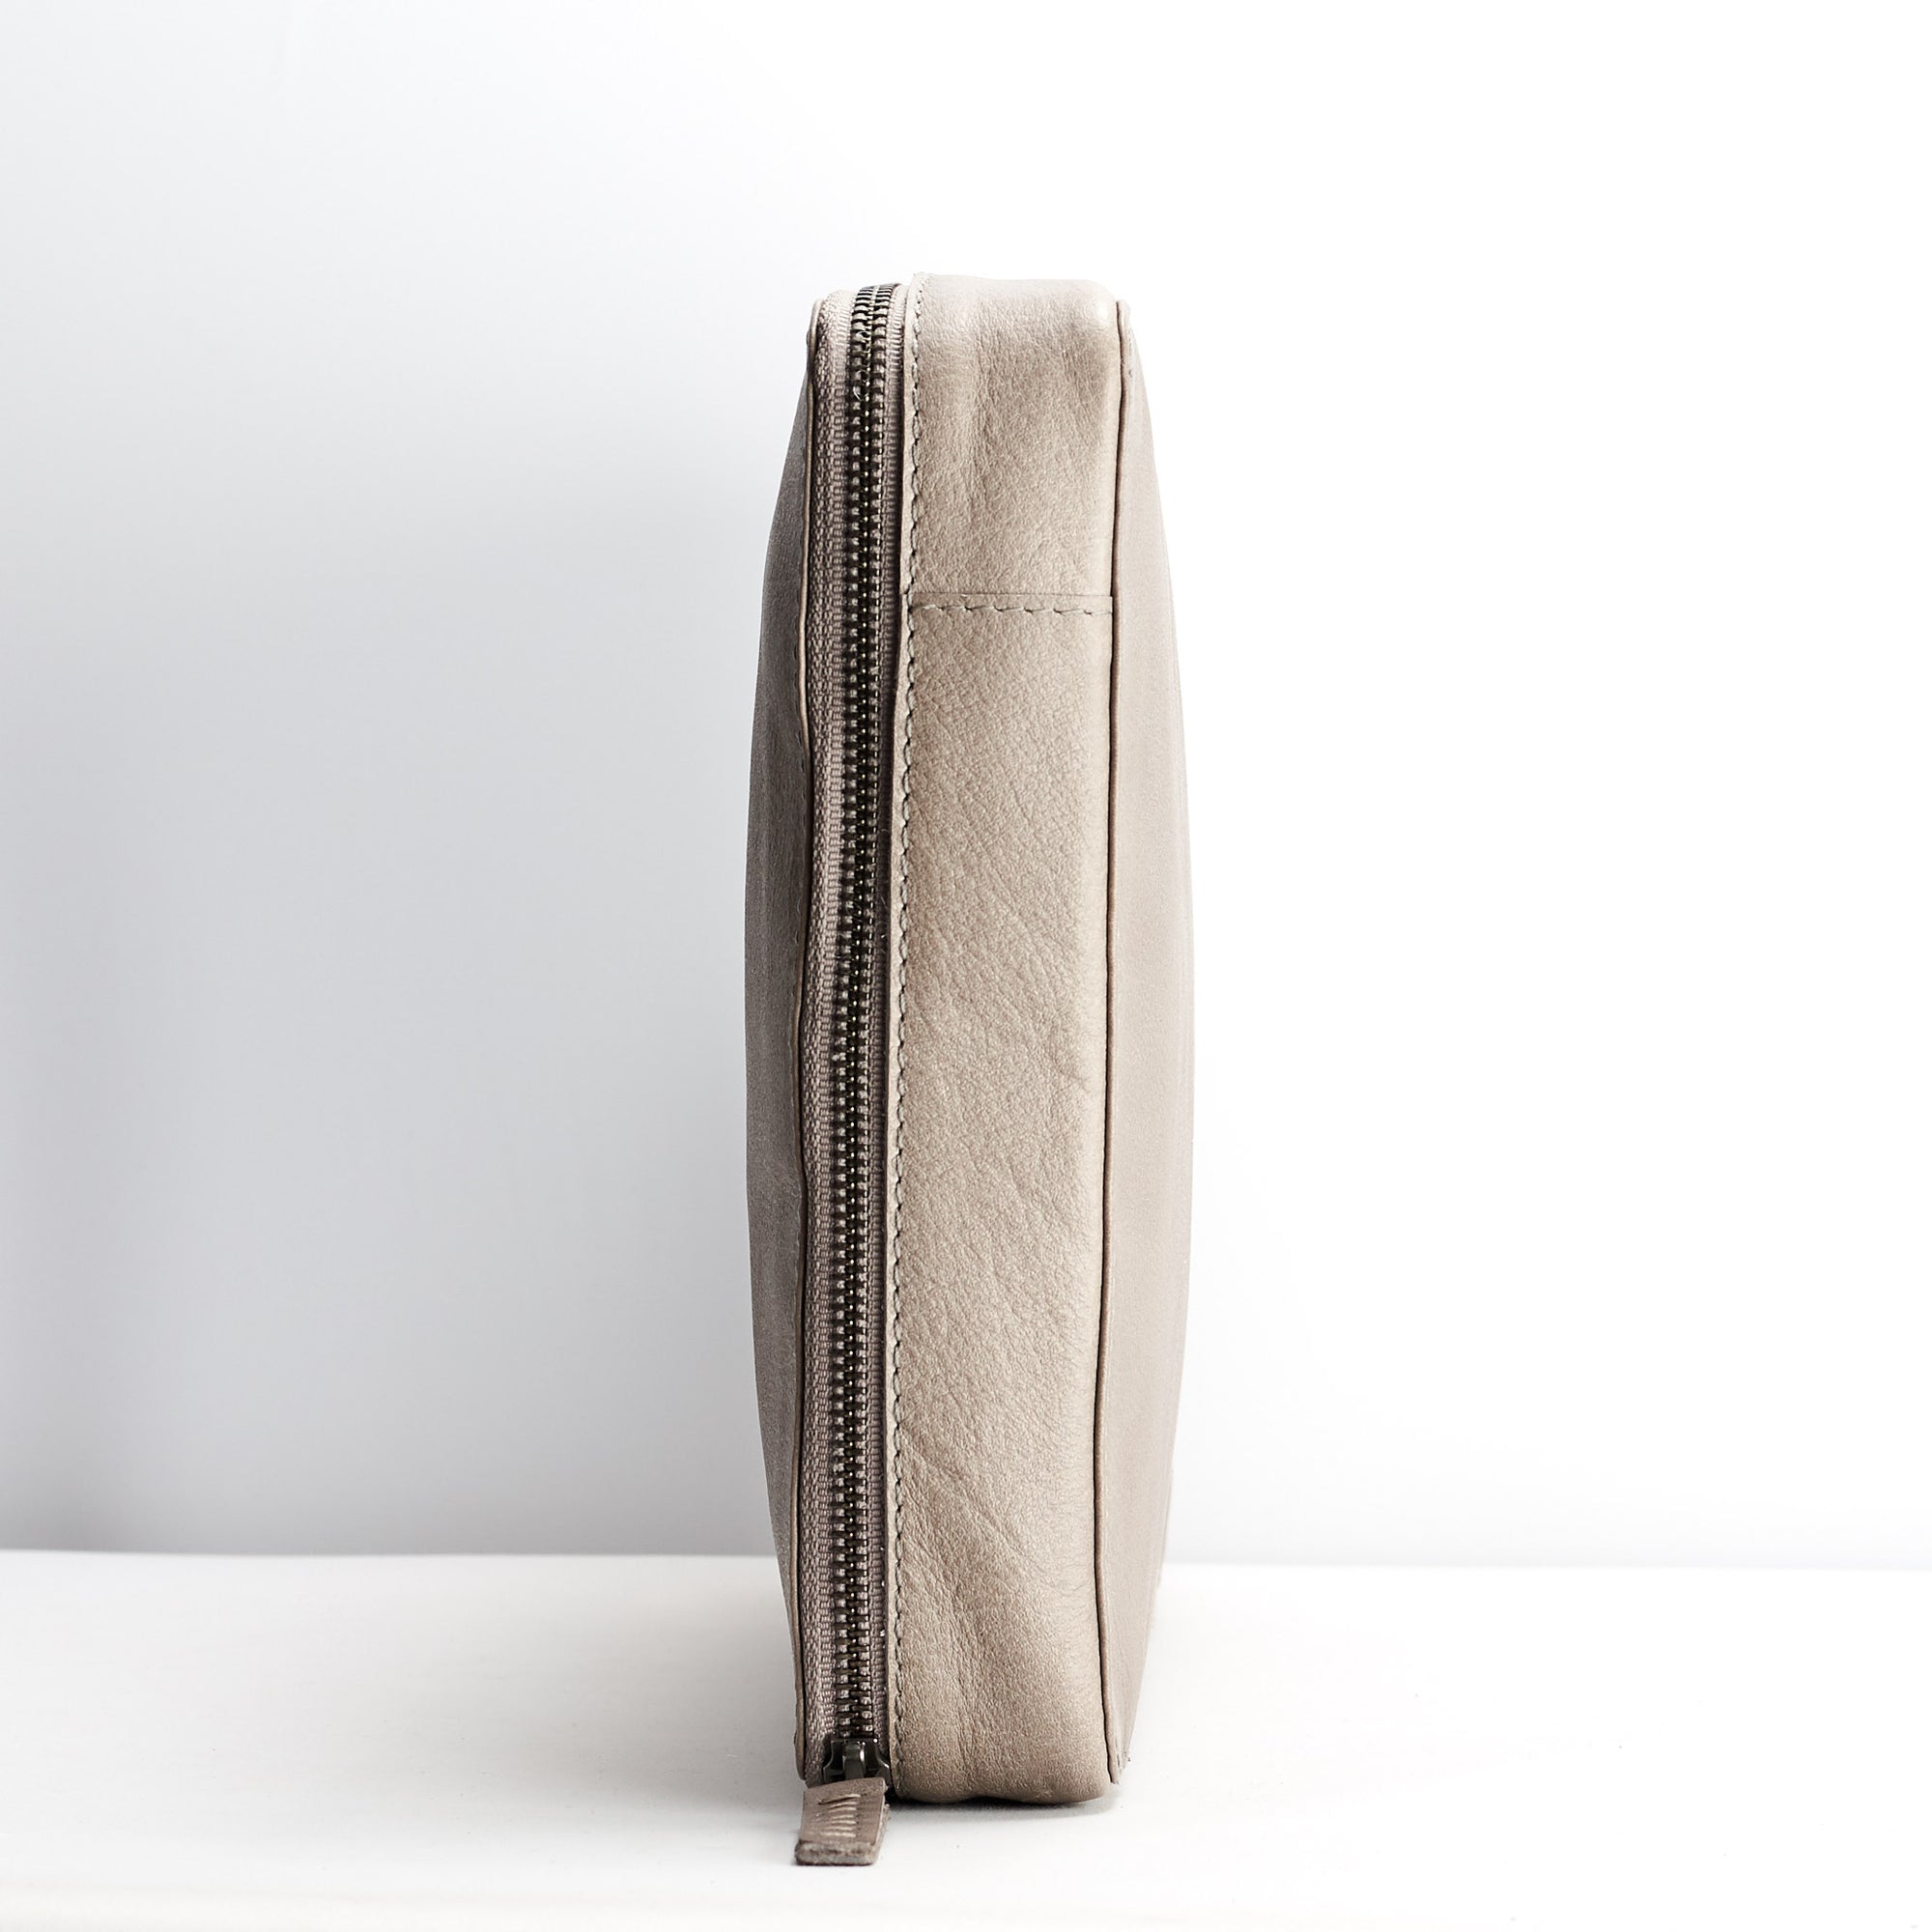 Slim profile. Best tech organizer bag for travel Grey by Capra Leather